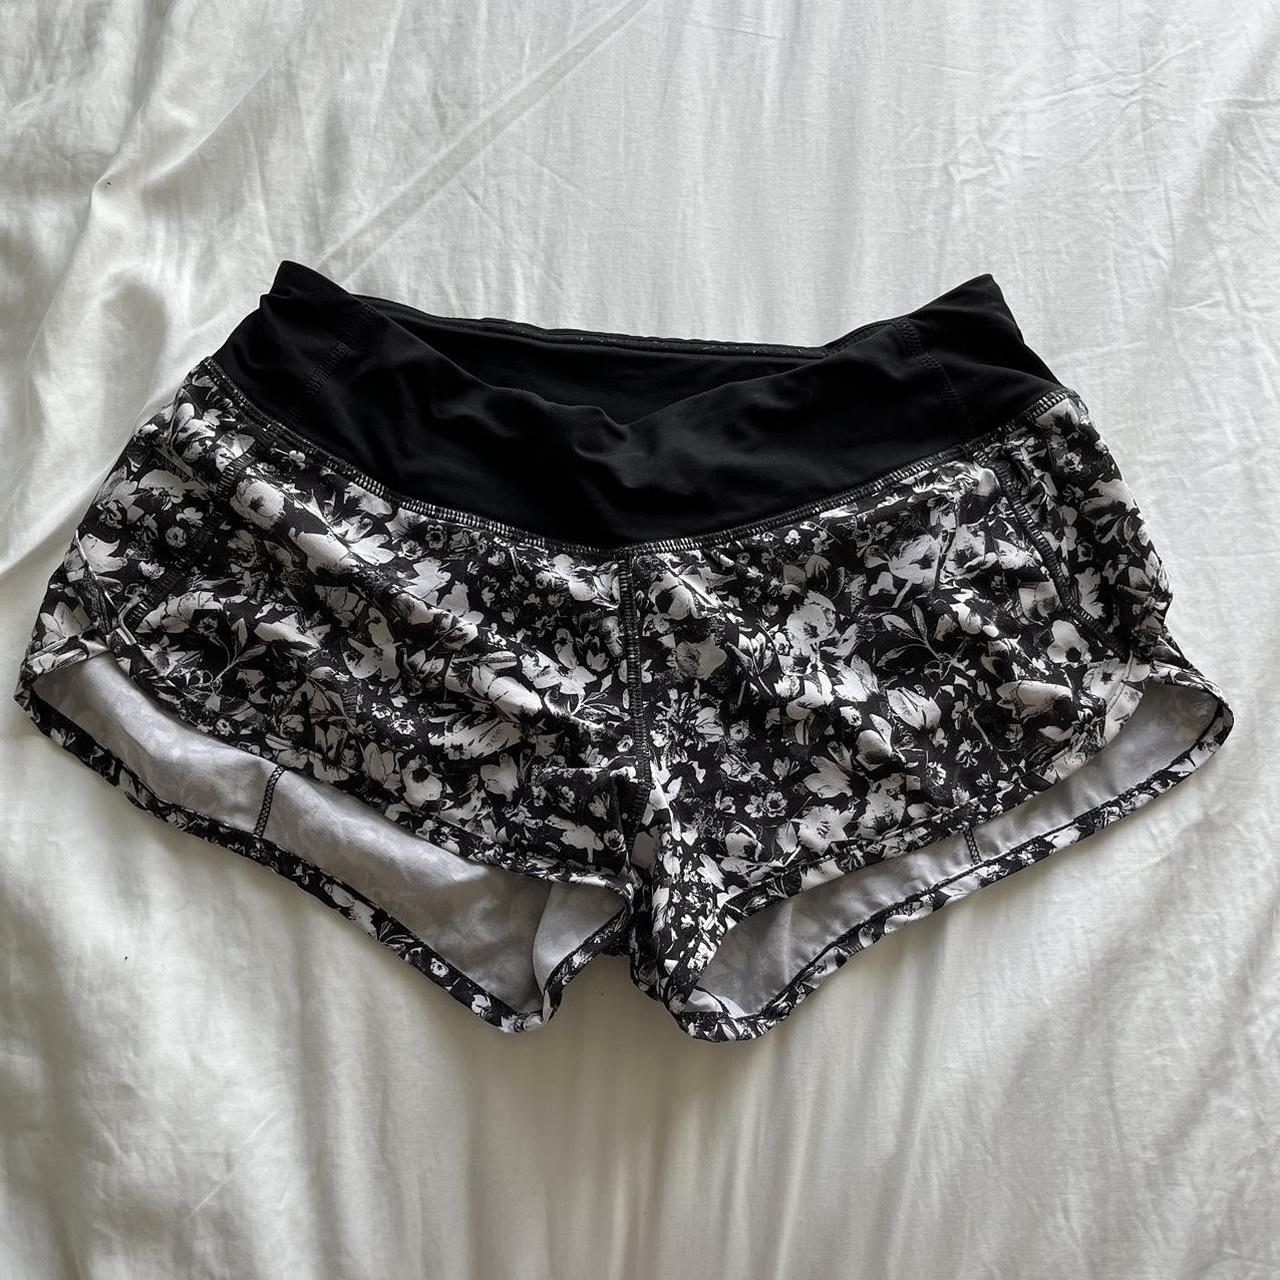 Lululemon Athletica Rare speed black leopard print shorts women's size 4